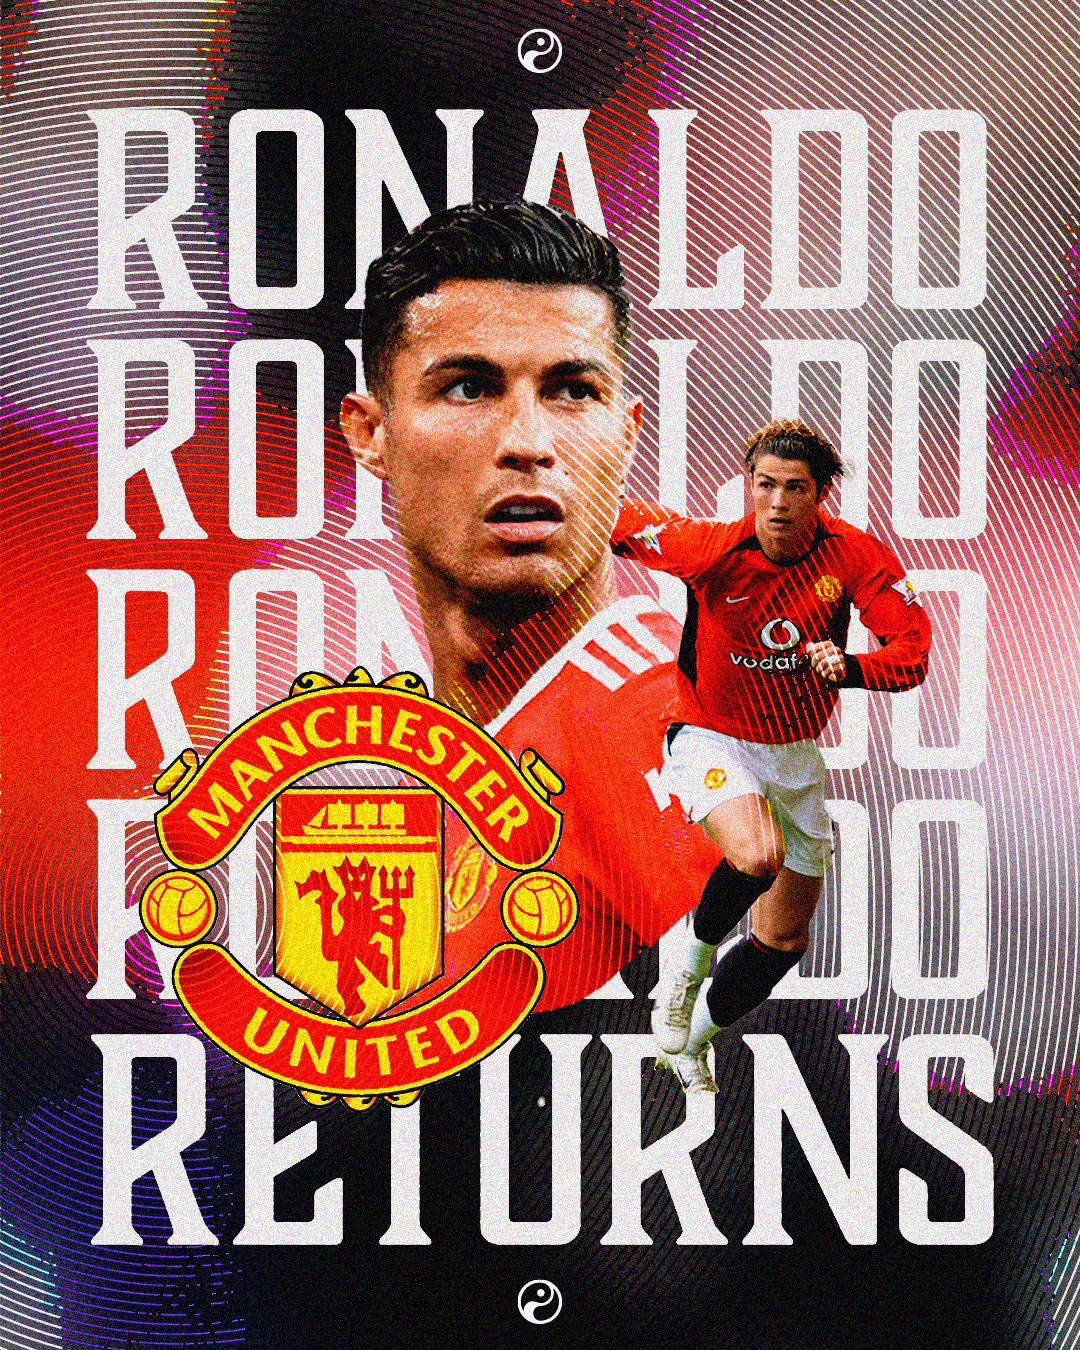 Ronaldo wallpaper manchester united